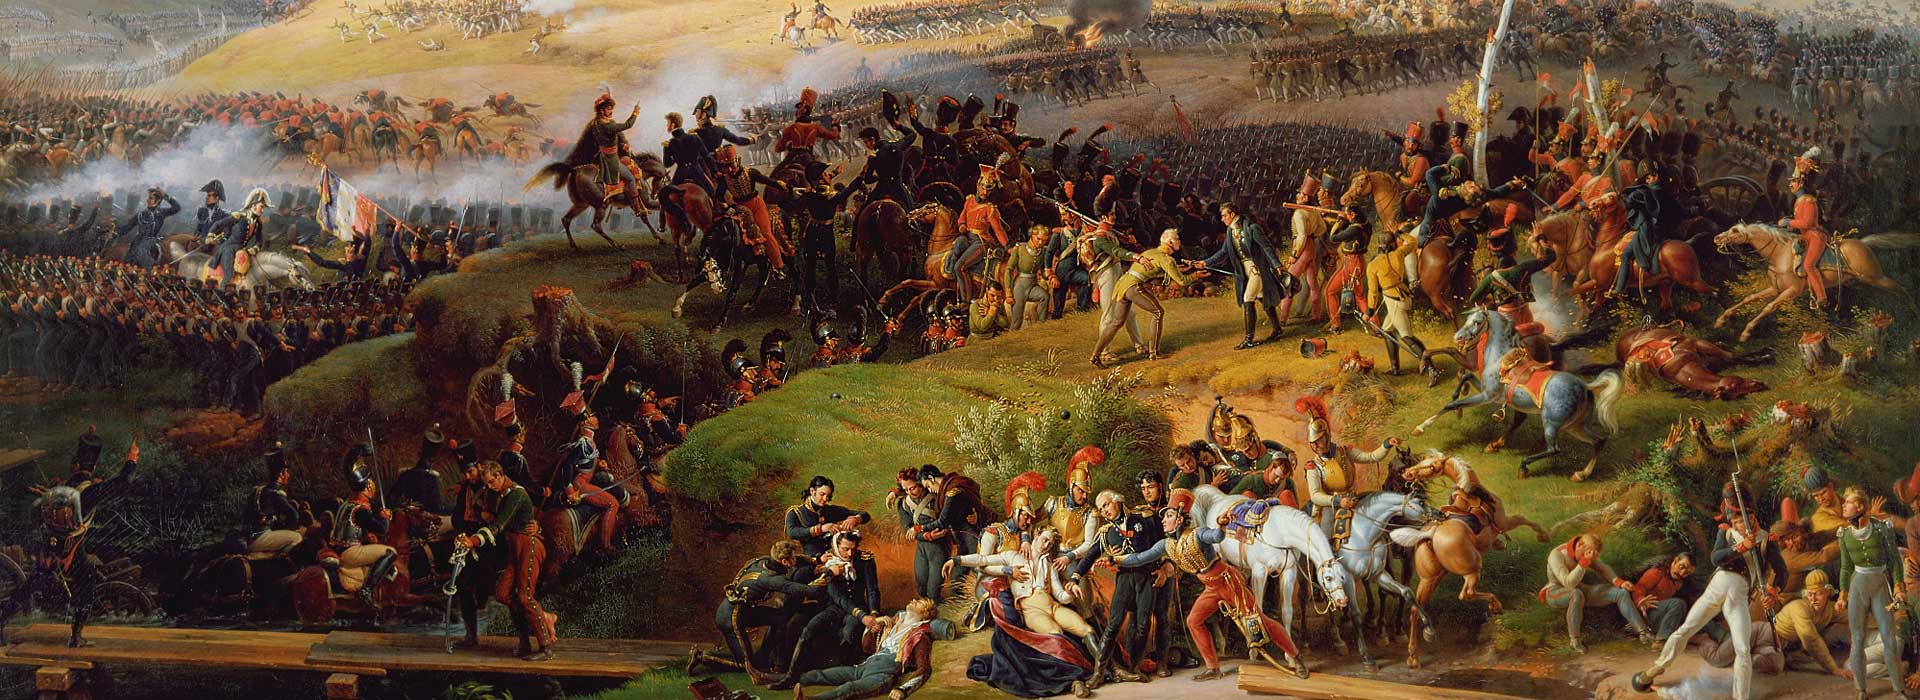 26 августа бородино. Бородинская битва 1812. Бородинское сражение 1812 года. Бородинское сражение 7 сентября 1812 года. Бородинское сражение 1812 ход сражения.